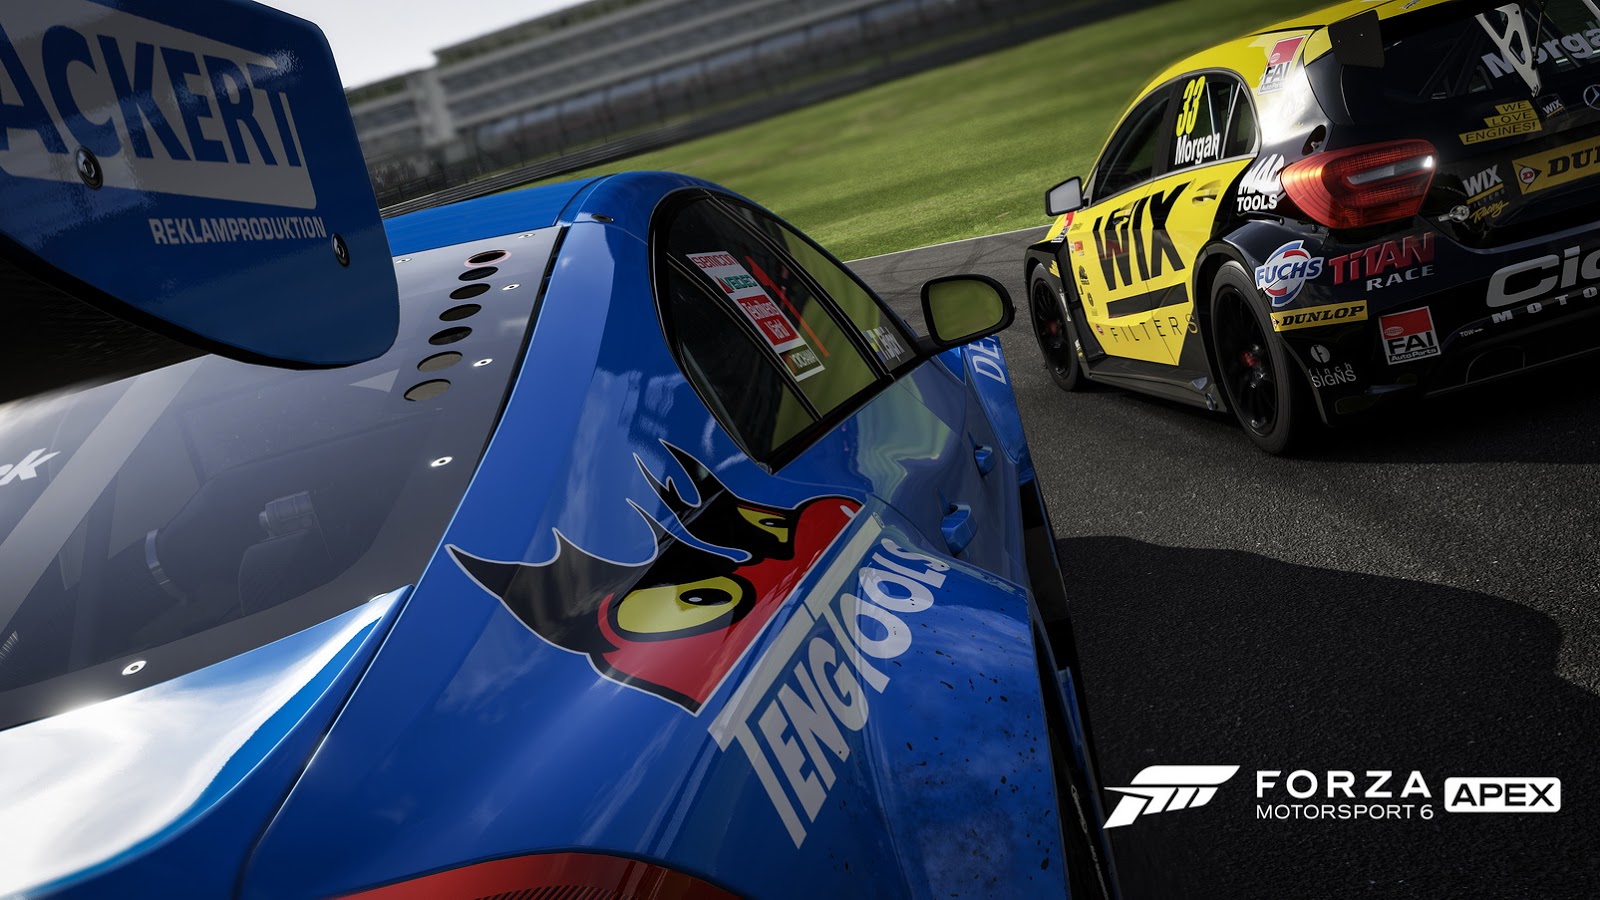 Forza Motorsport 6 Apex PC 4k Walkthrough - Gameplay Part 1 - 